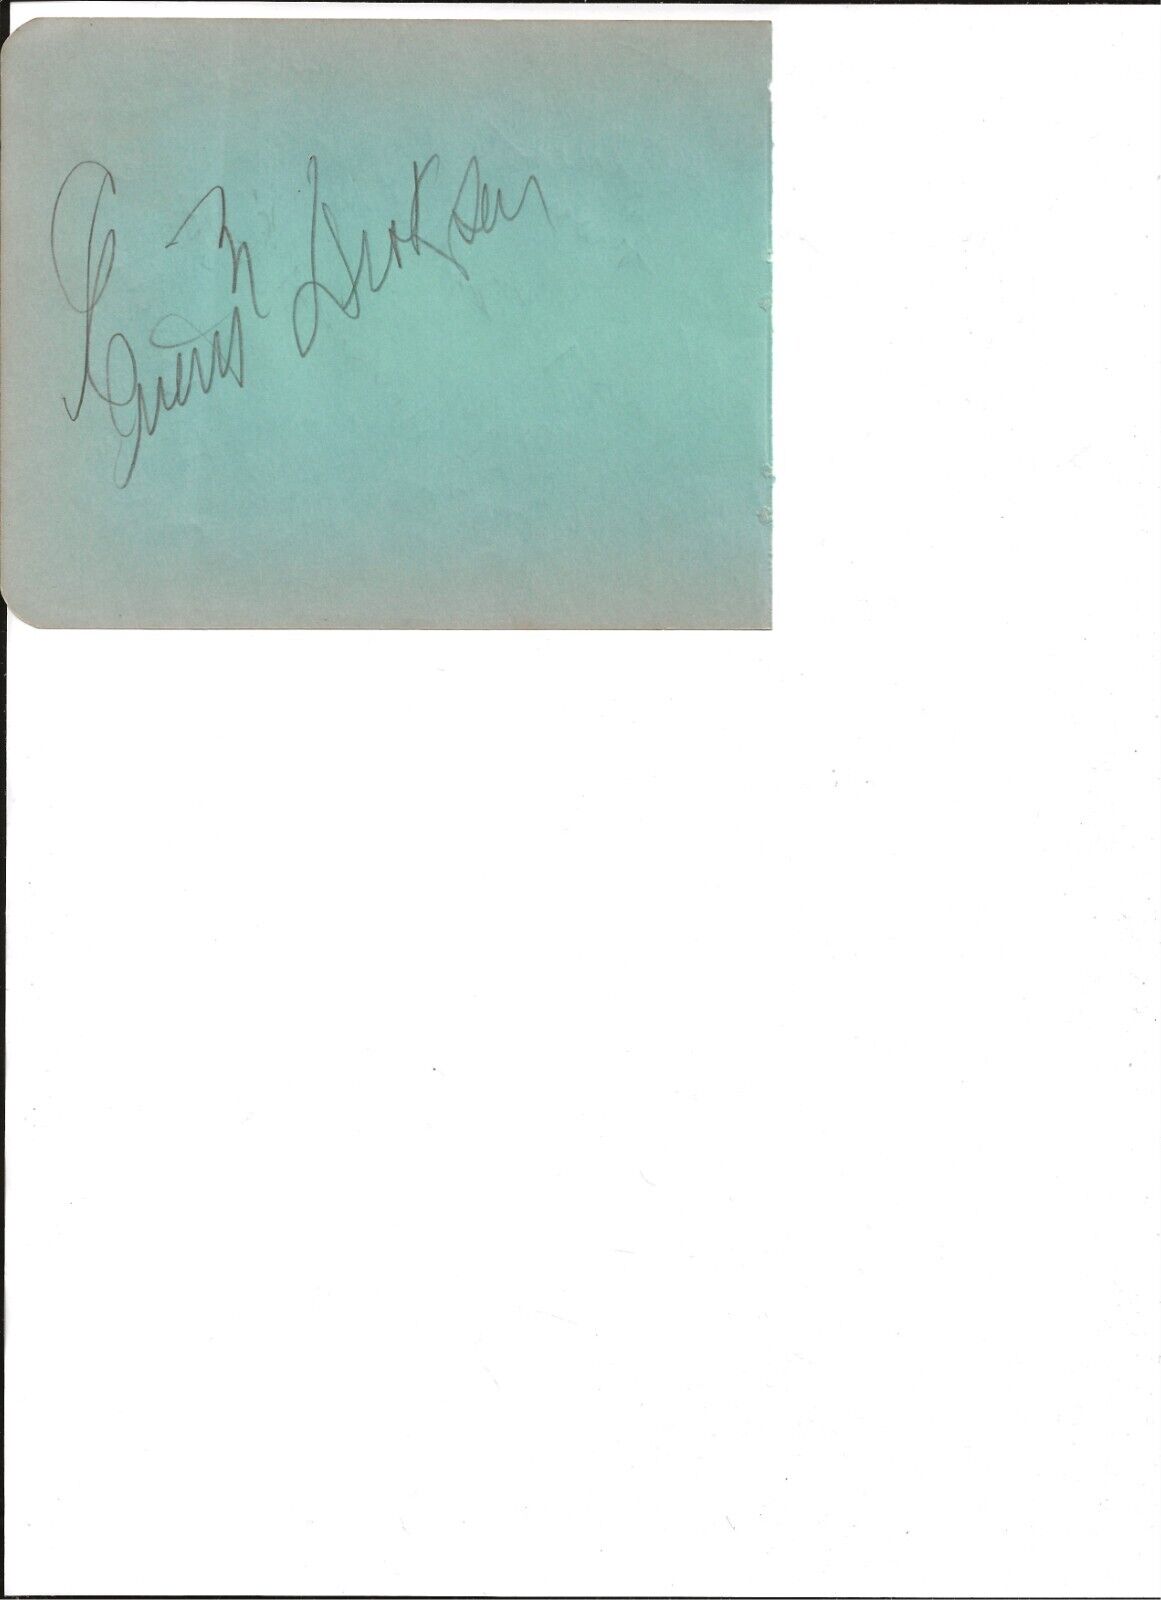 Everett Dirksen Senator Illinois autographed album page